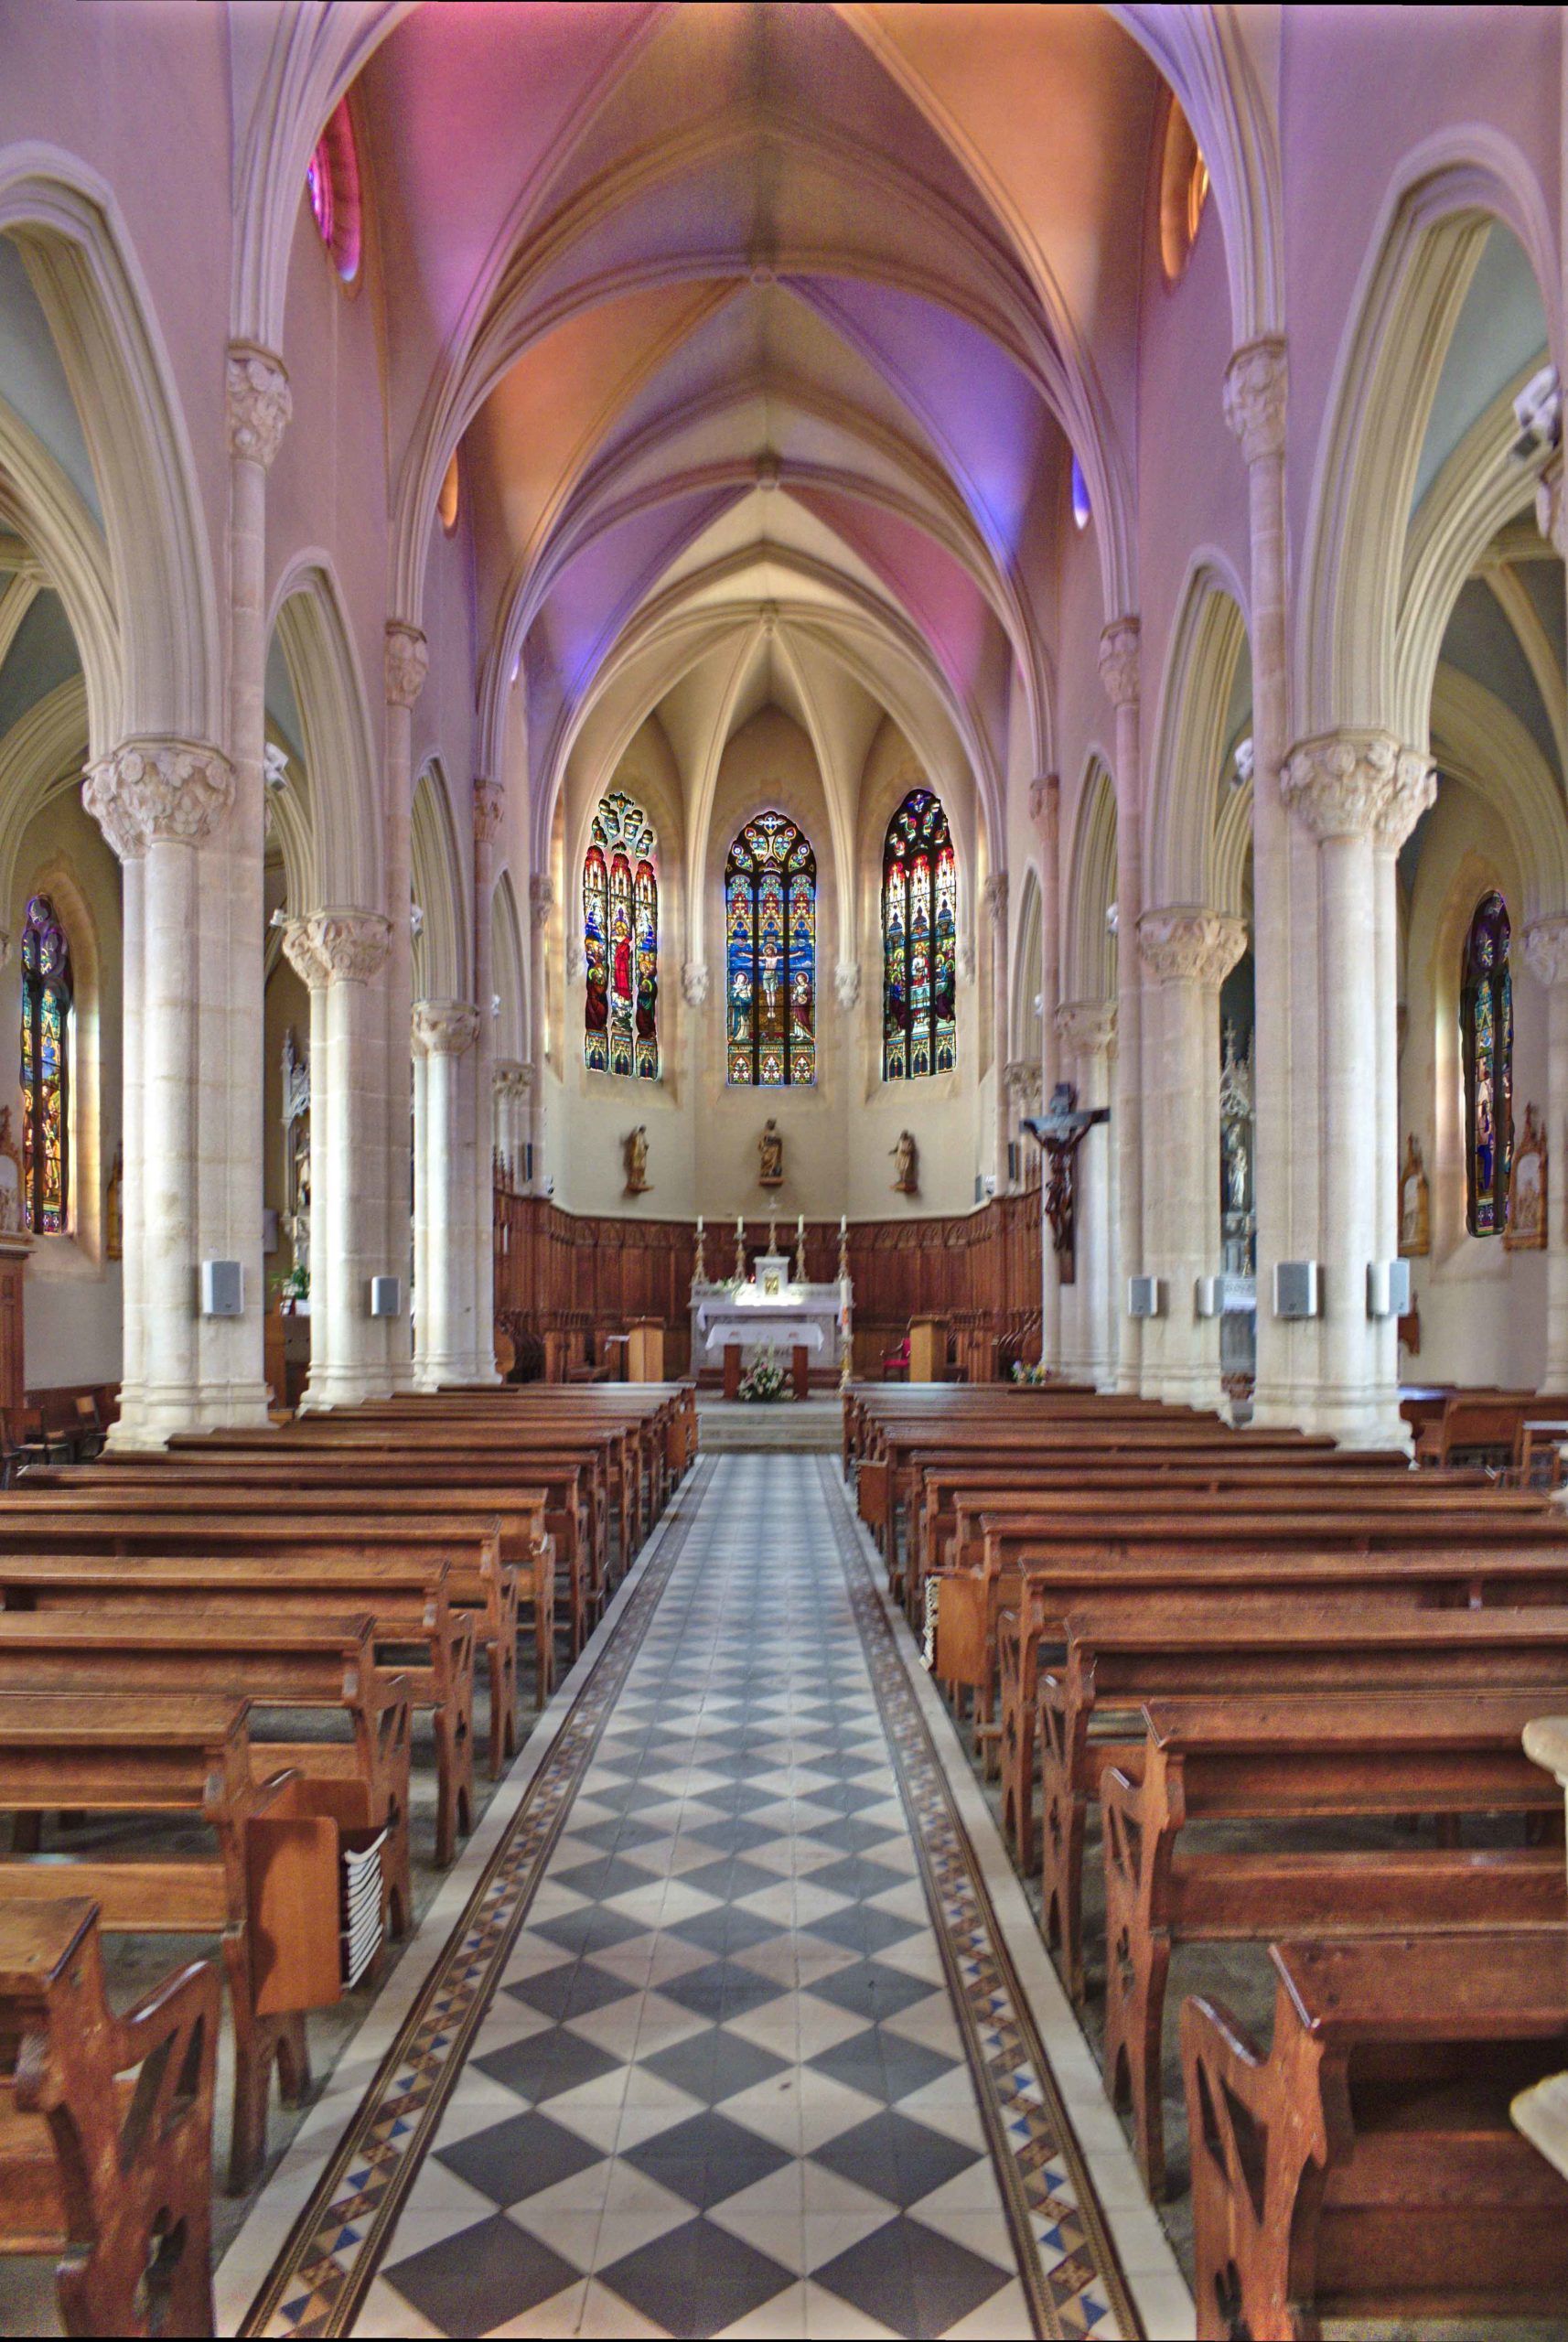 La nef de l'église de Theizé © Csitt - licence [CC BY-SA 4.0] from Wikimedia Commons